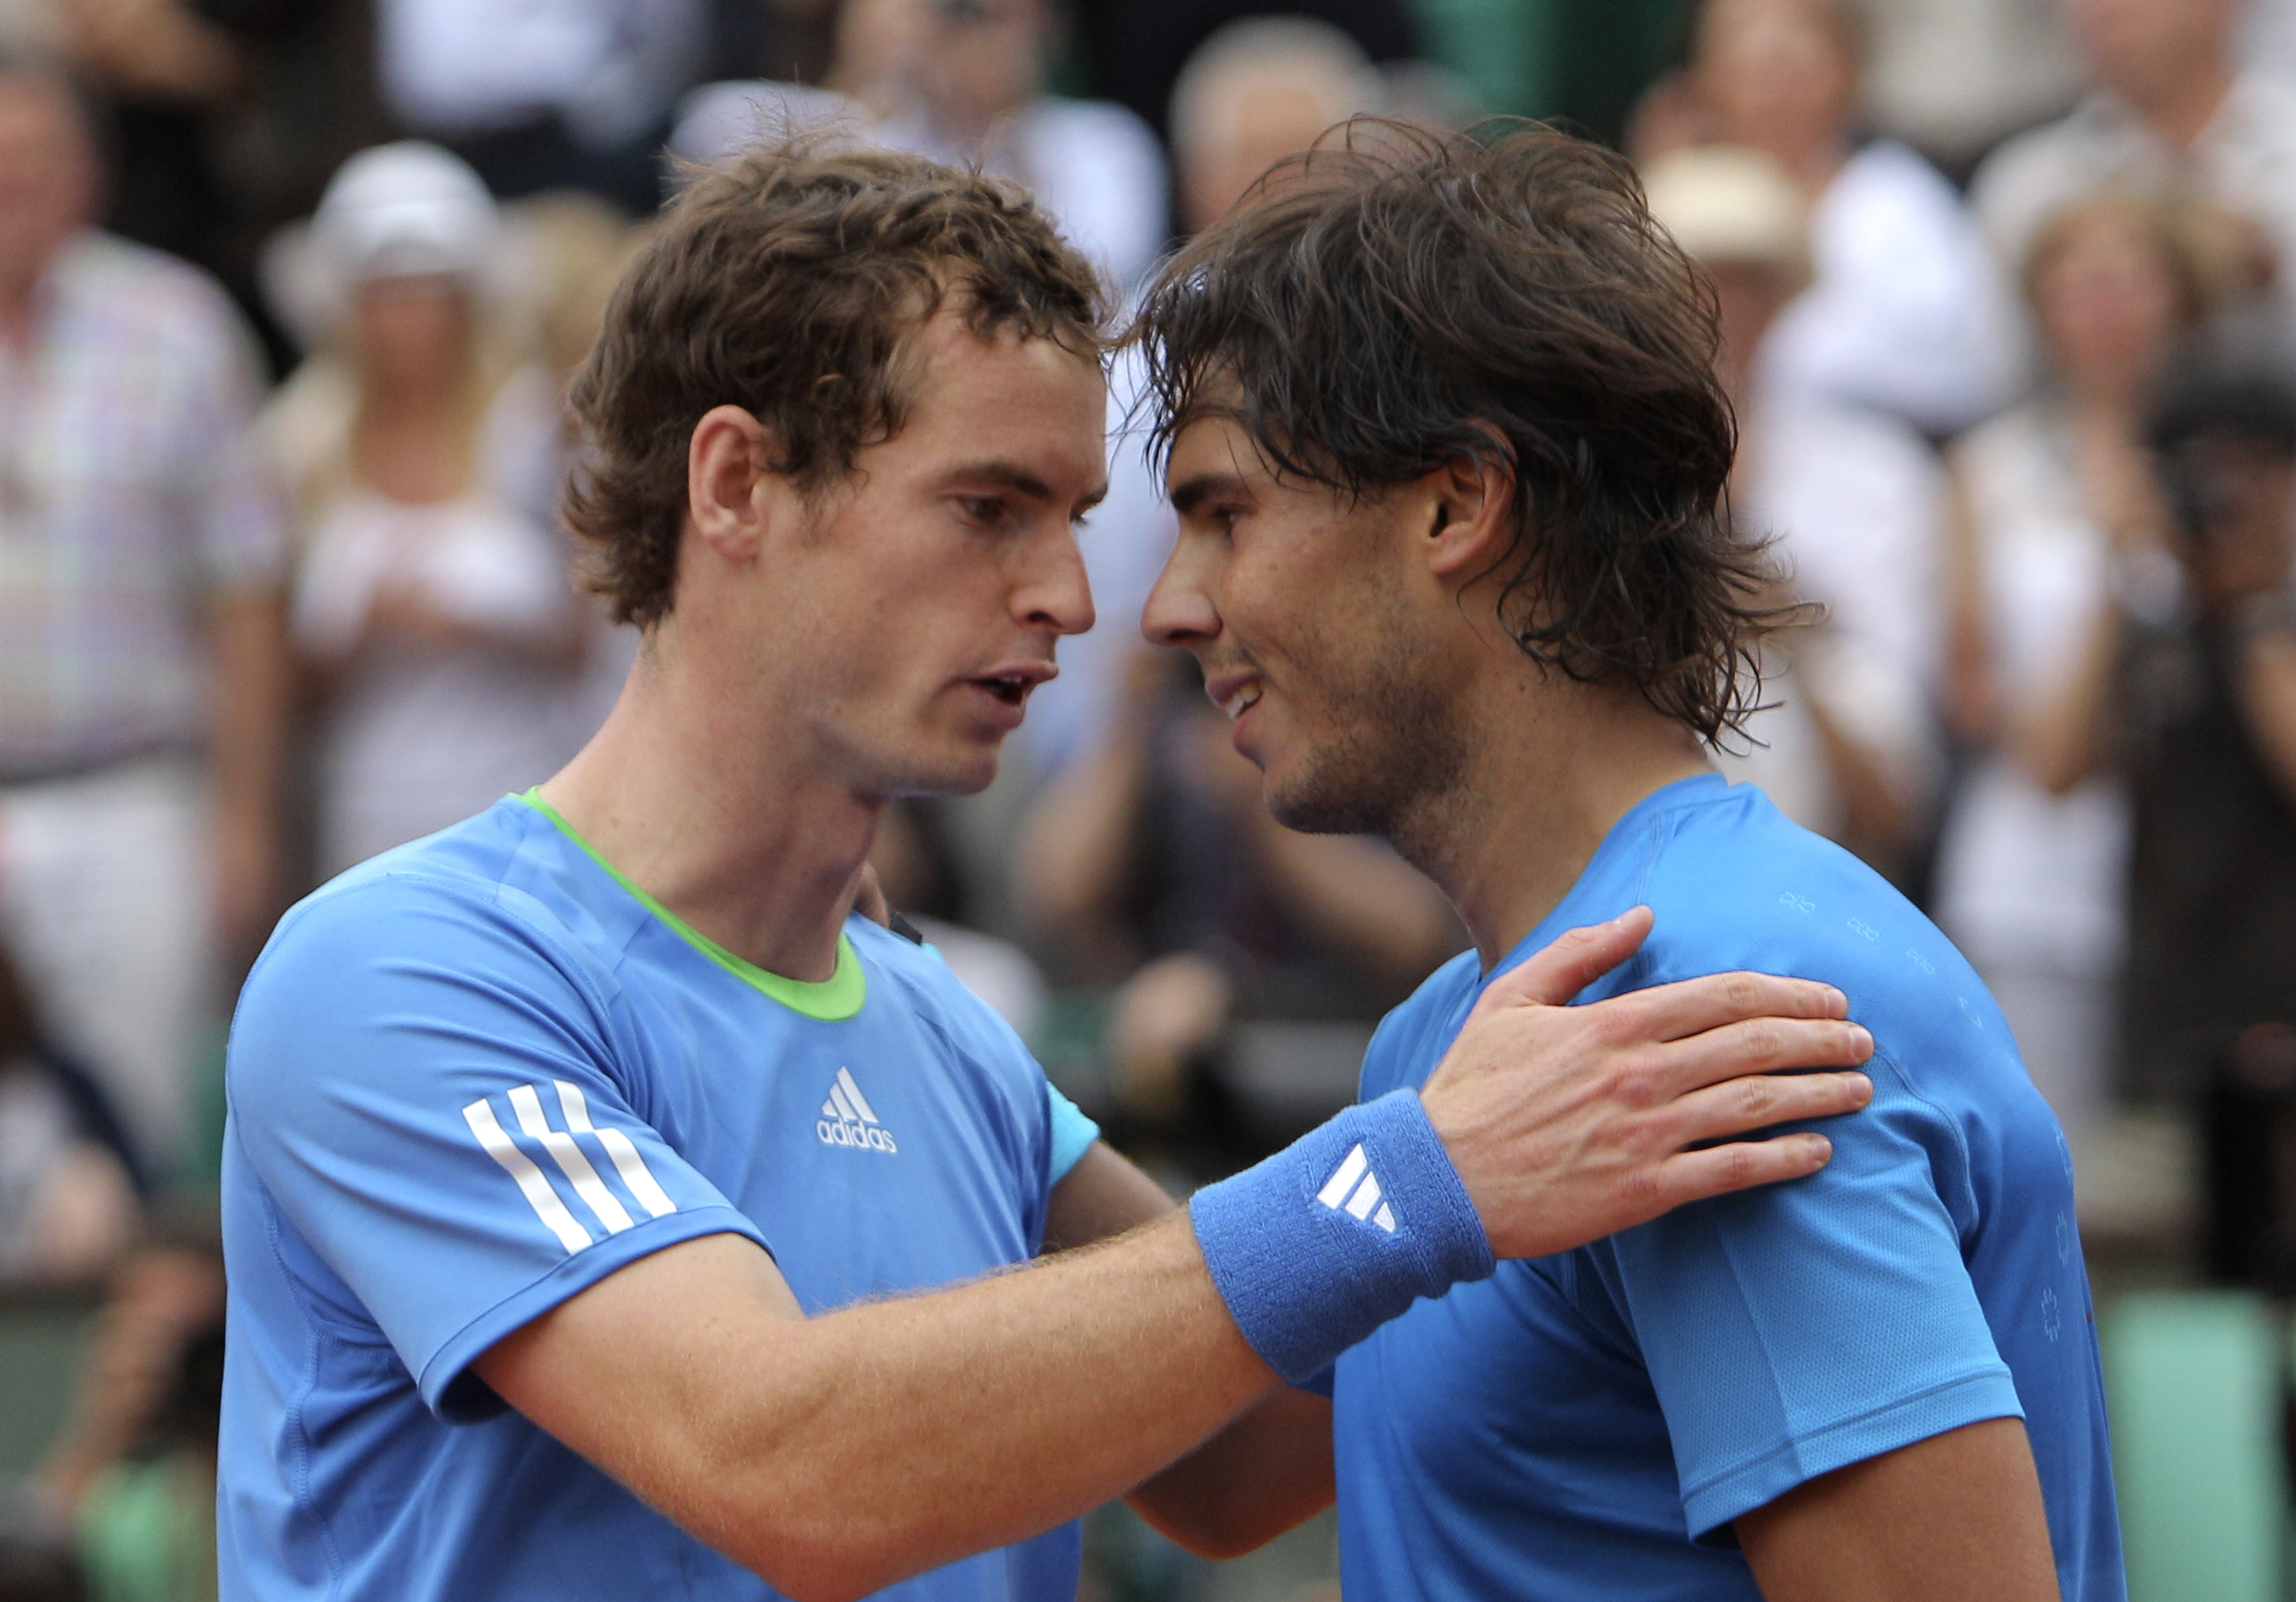 Tennis, Roger Federer, Novak Djokovic, Rafael Nadal, Andy Murray